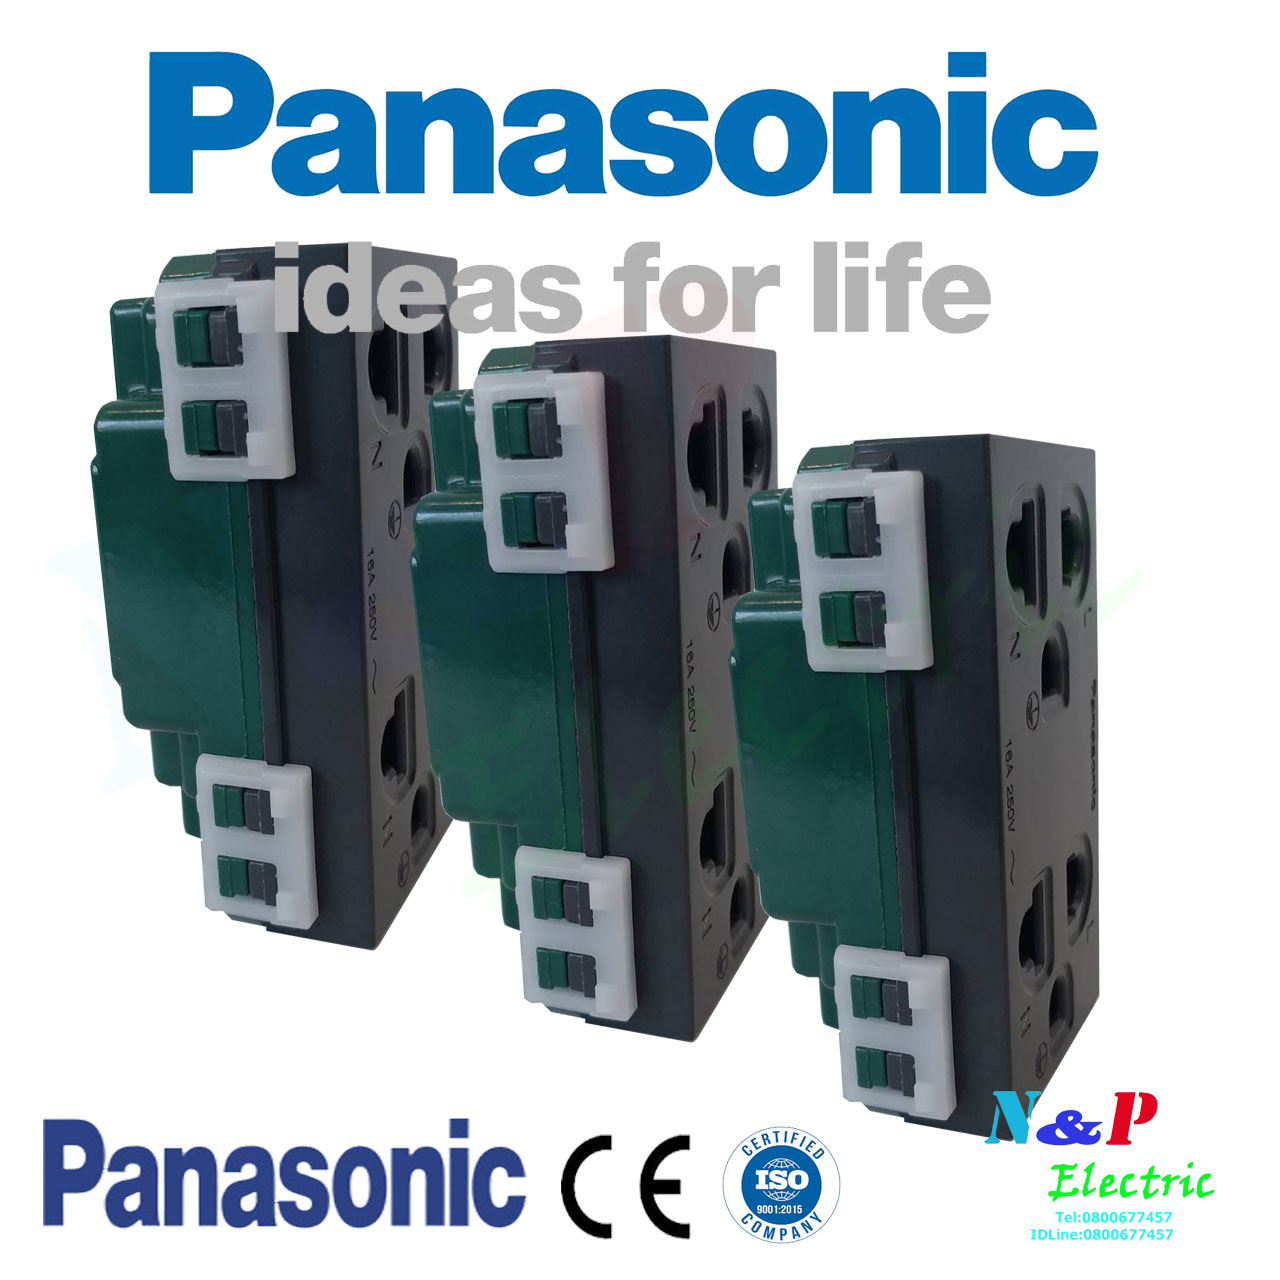 Panasonic เต้ารับกราวด์คู่ สีเทาดำ รุ่นใหม่/ปลั๊กกราวด์คู่ สีเทาดำ รุ่นใหม่ WEG 15929H Full-Color Wide Series